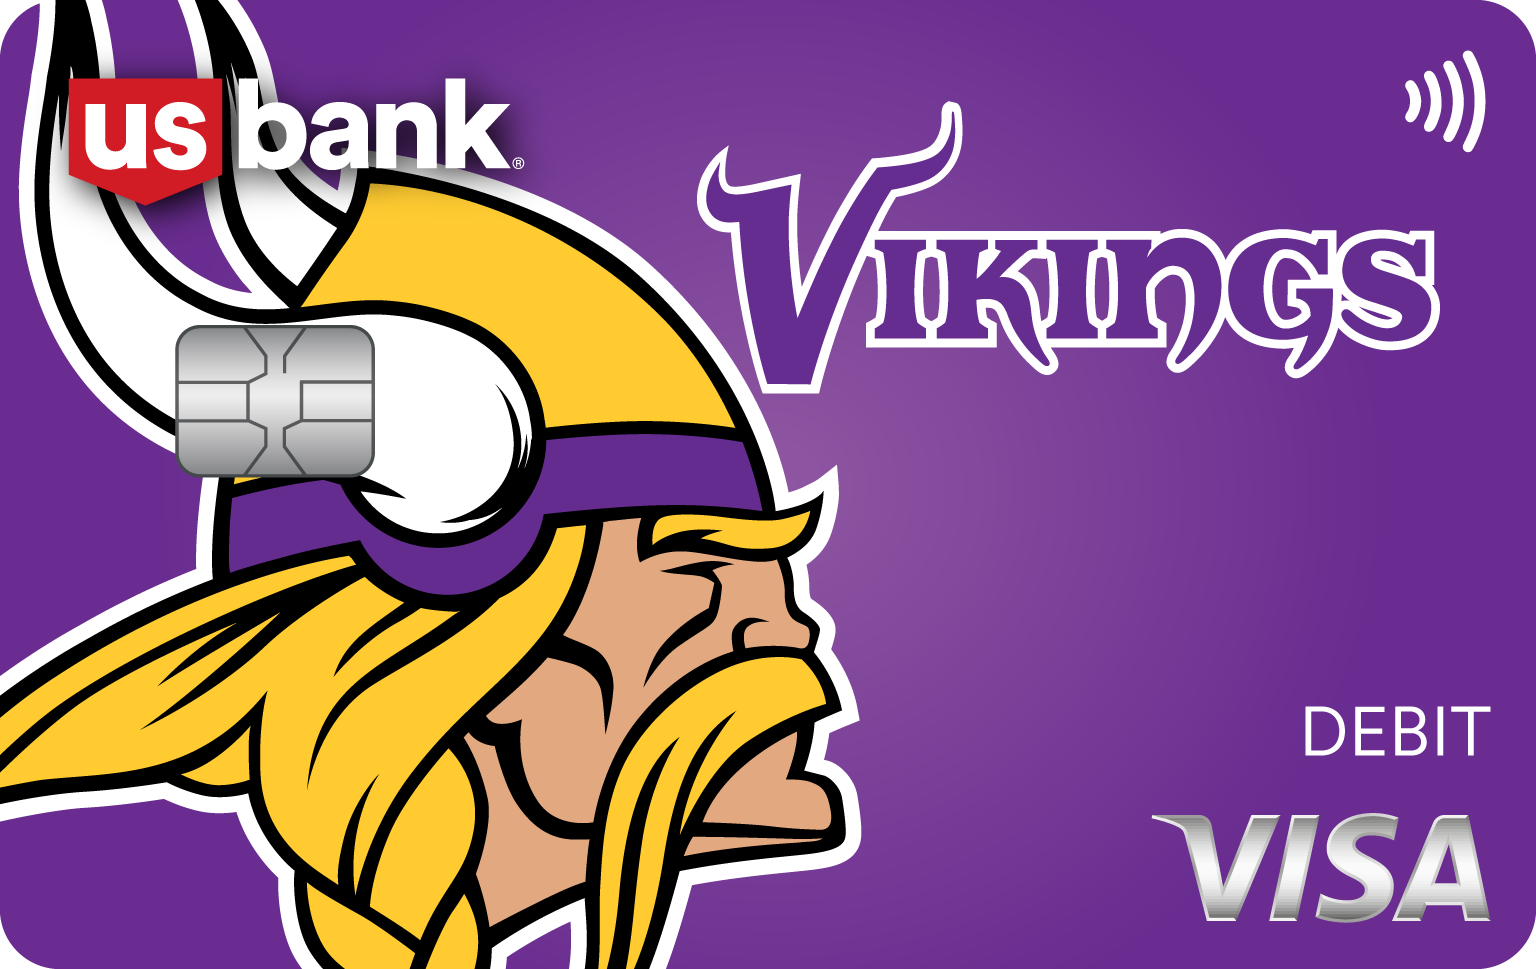 Tarjeta 4. Diseño de tarjeta de débito Visa de los Vikings de Minnesota.